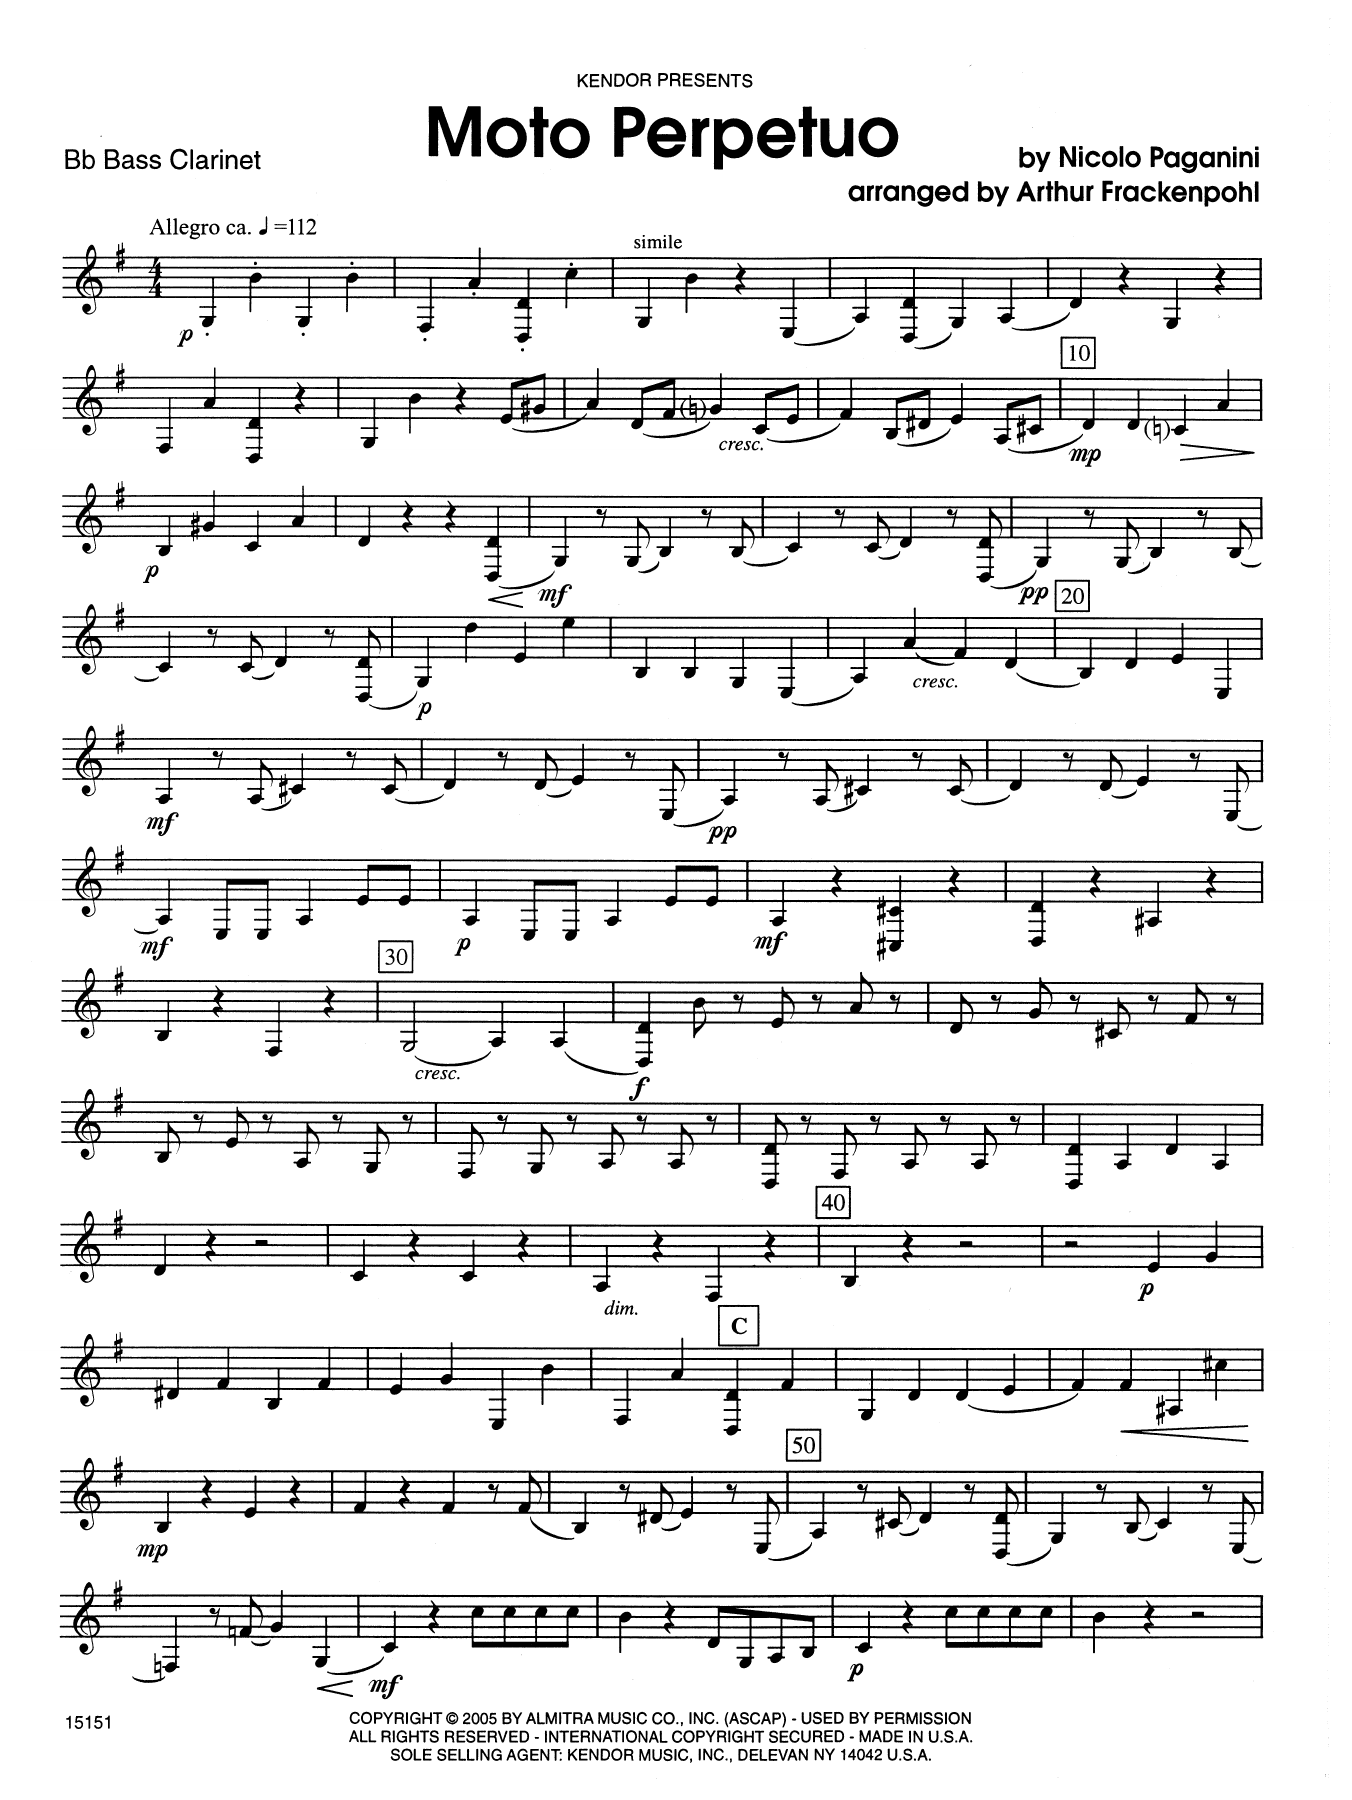 Download Arthur Frackenpohl Moto Perpetuo - Bb Bass Clarinet Sheet Music